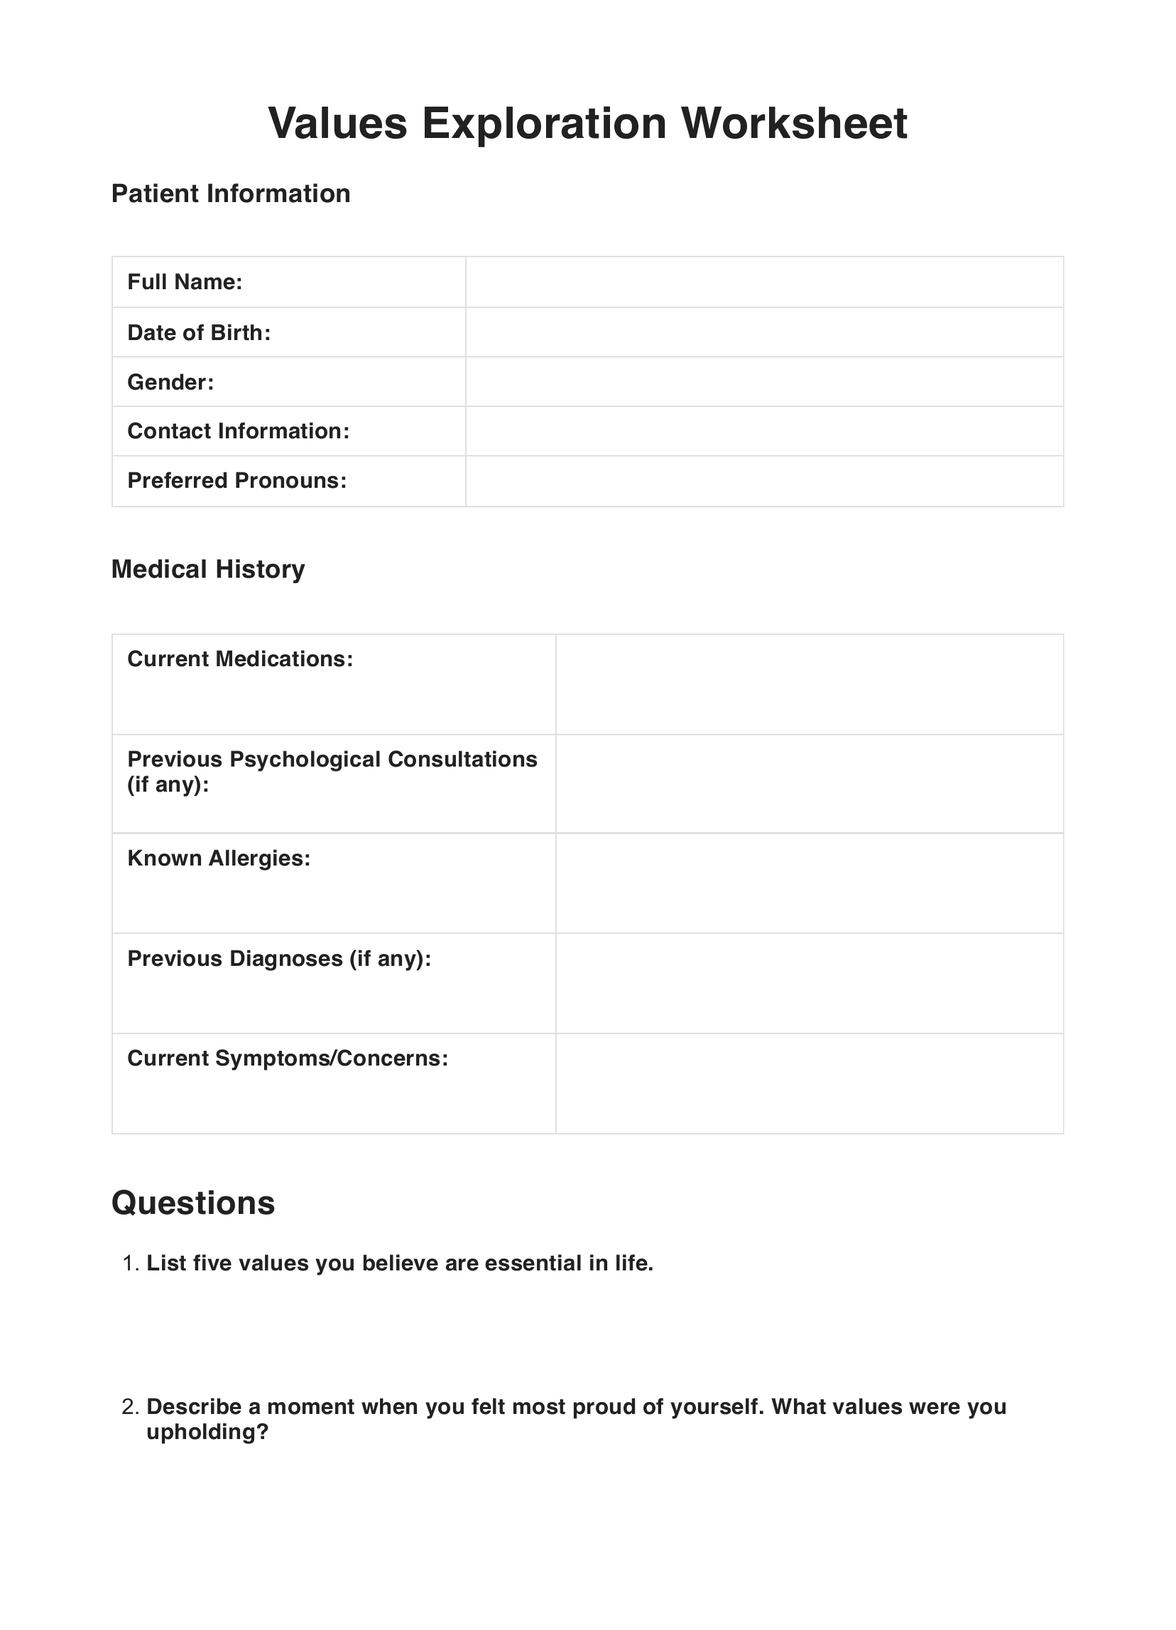 Values Exploration Worksheets PDF Example